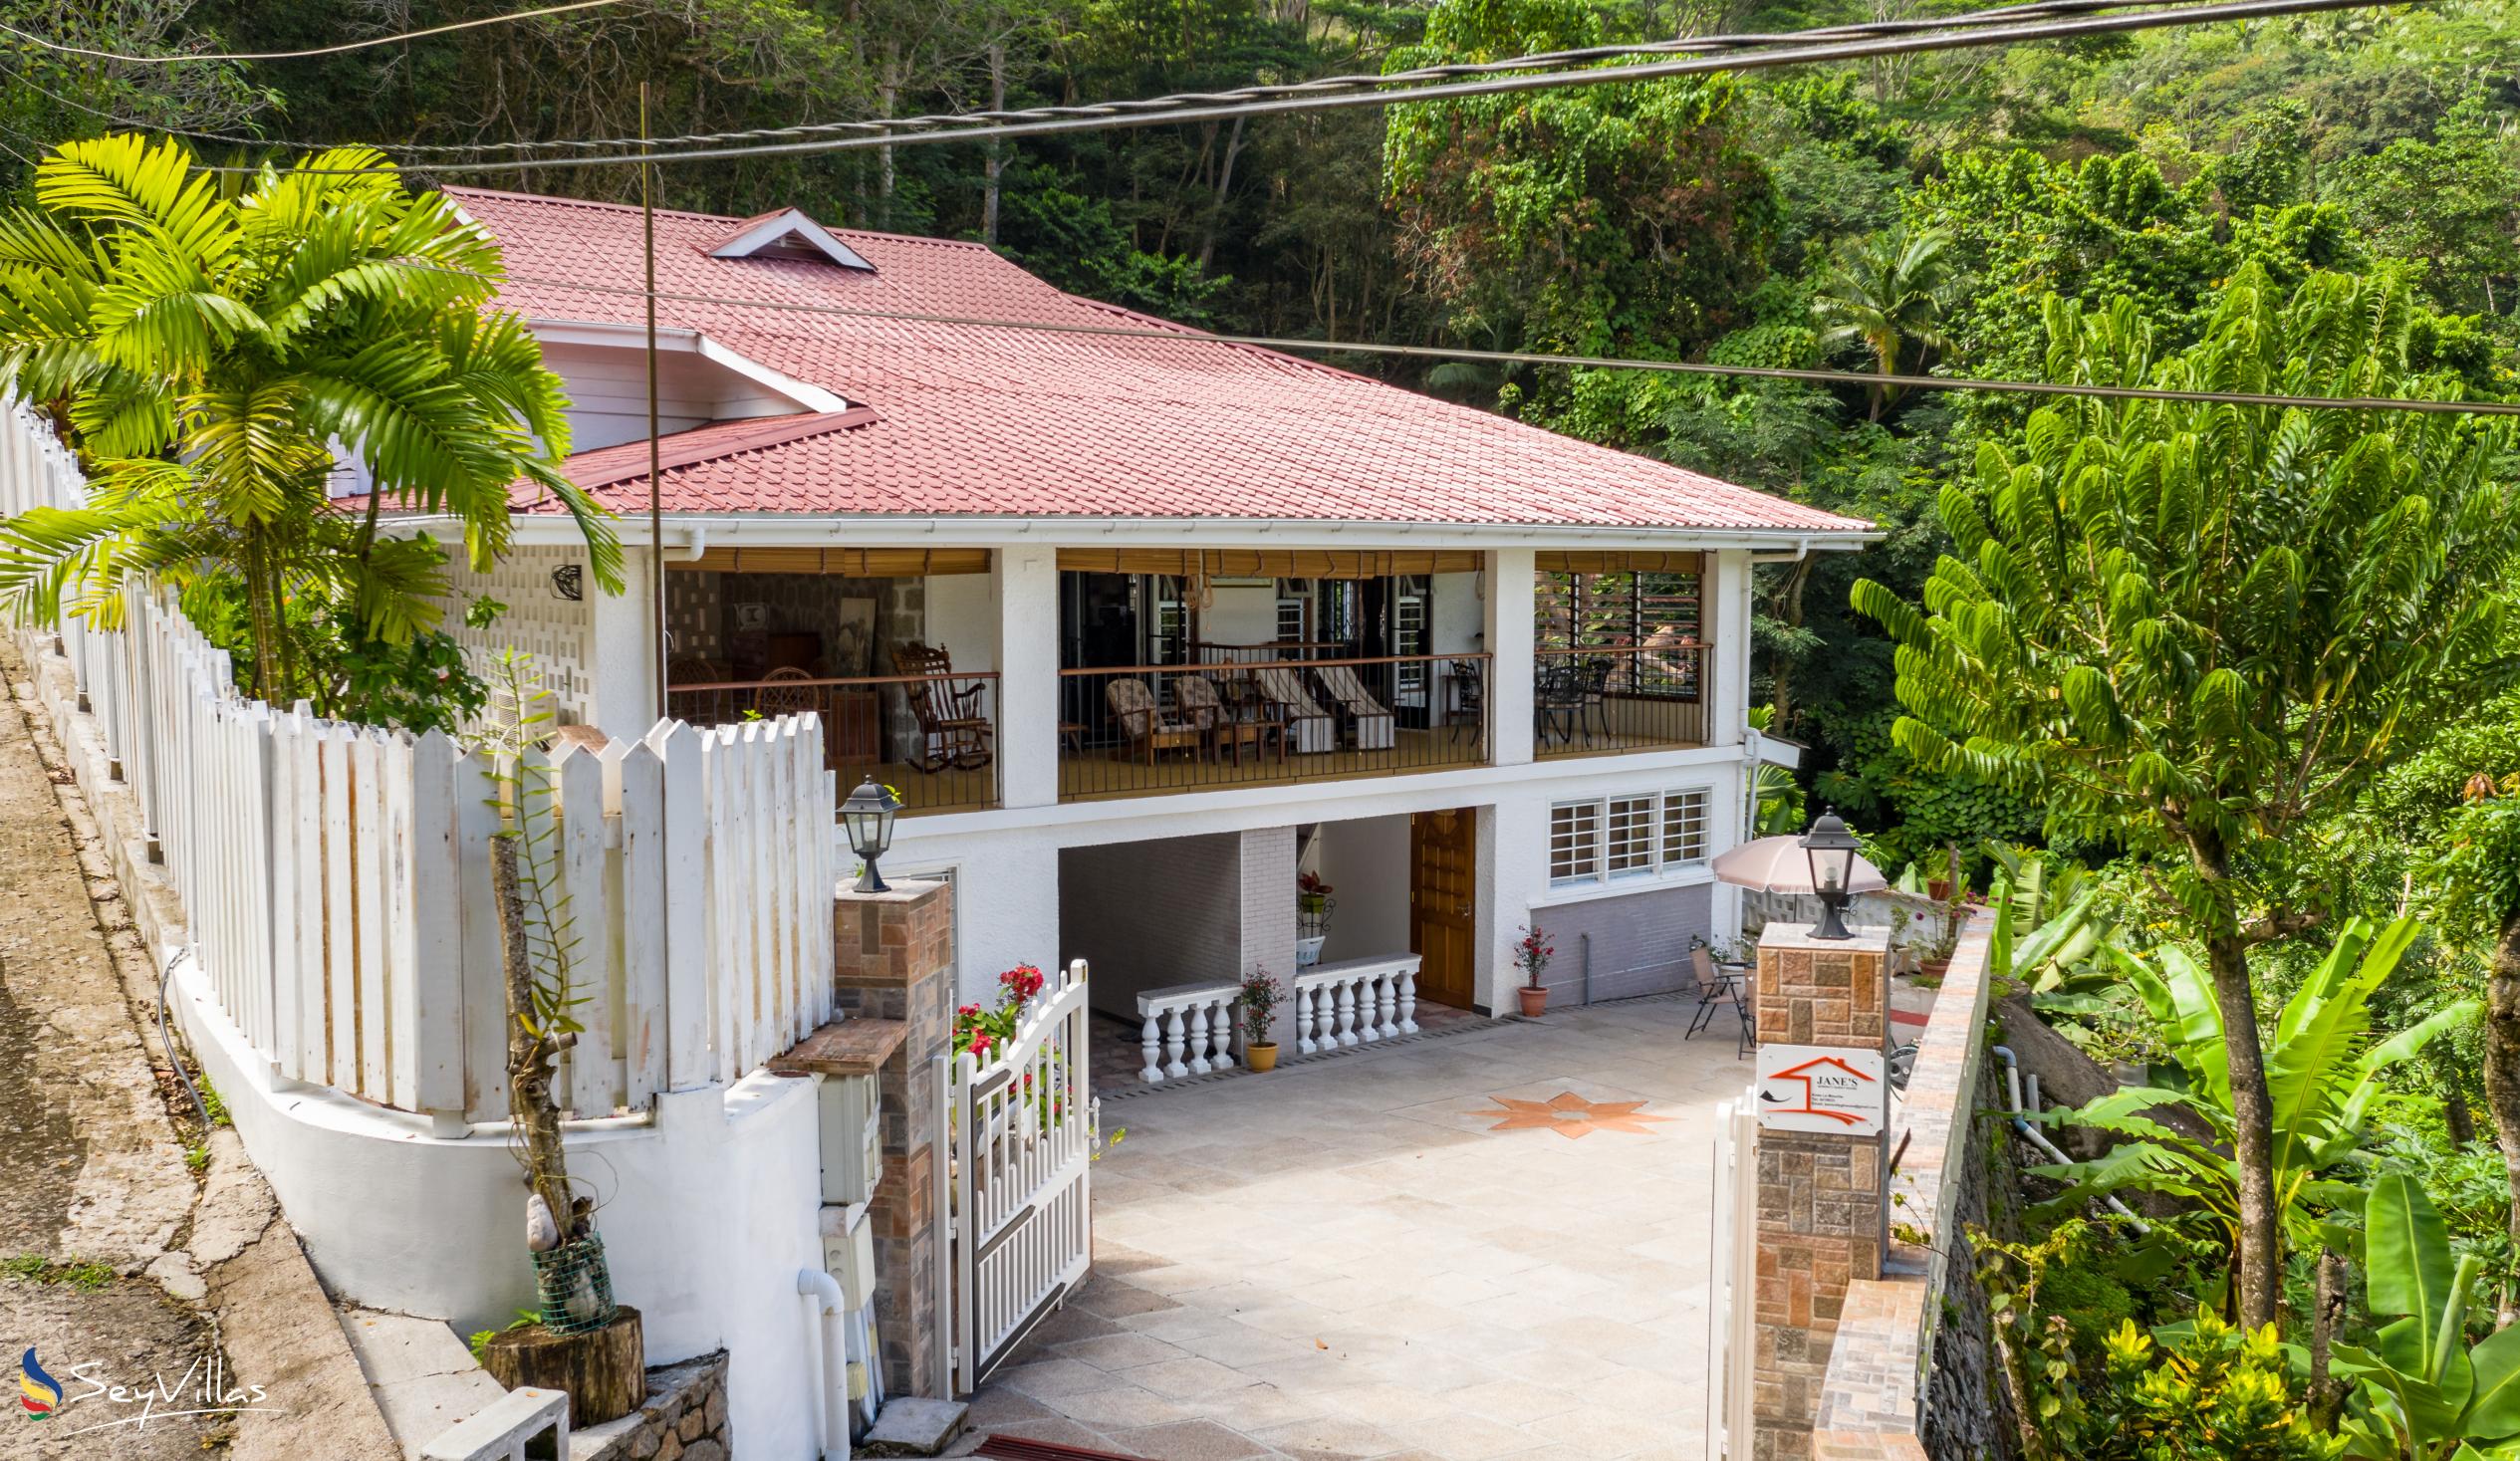 Foto 4: Jane's Serenity Guesthouse - Aussenbereich - Mahé (Seychellen)